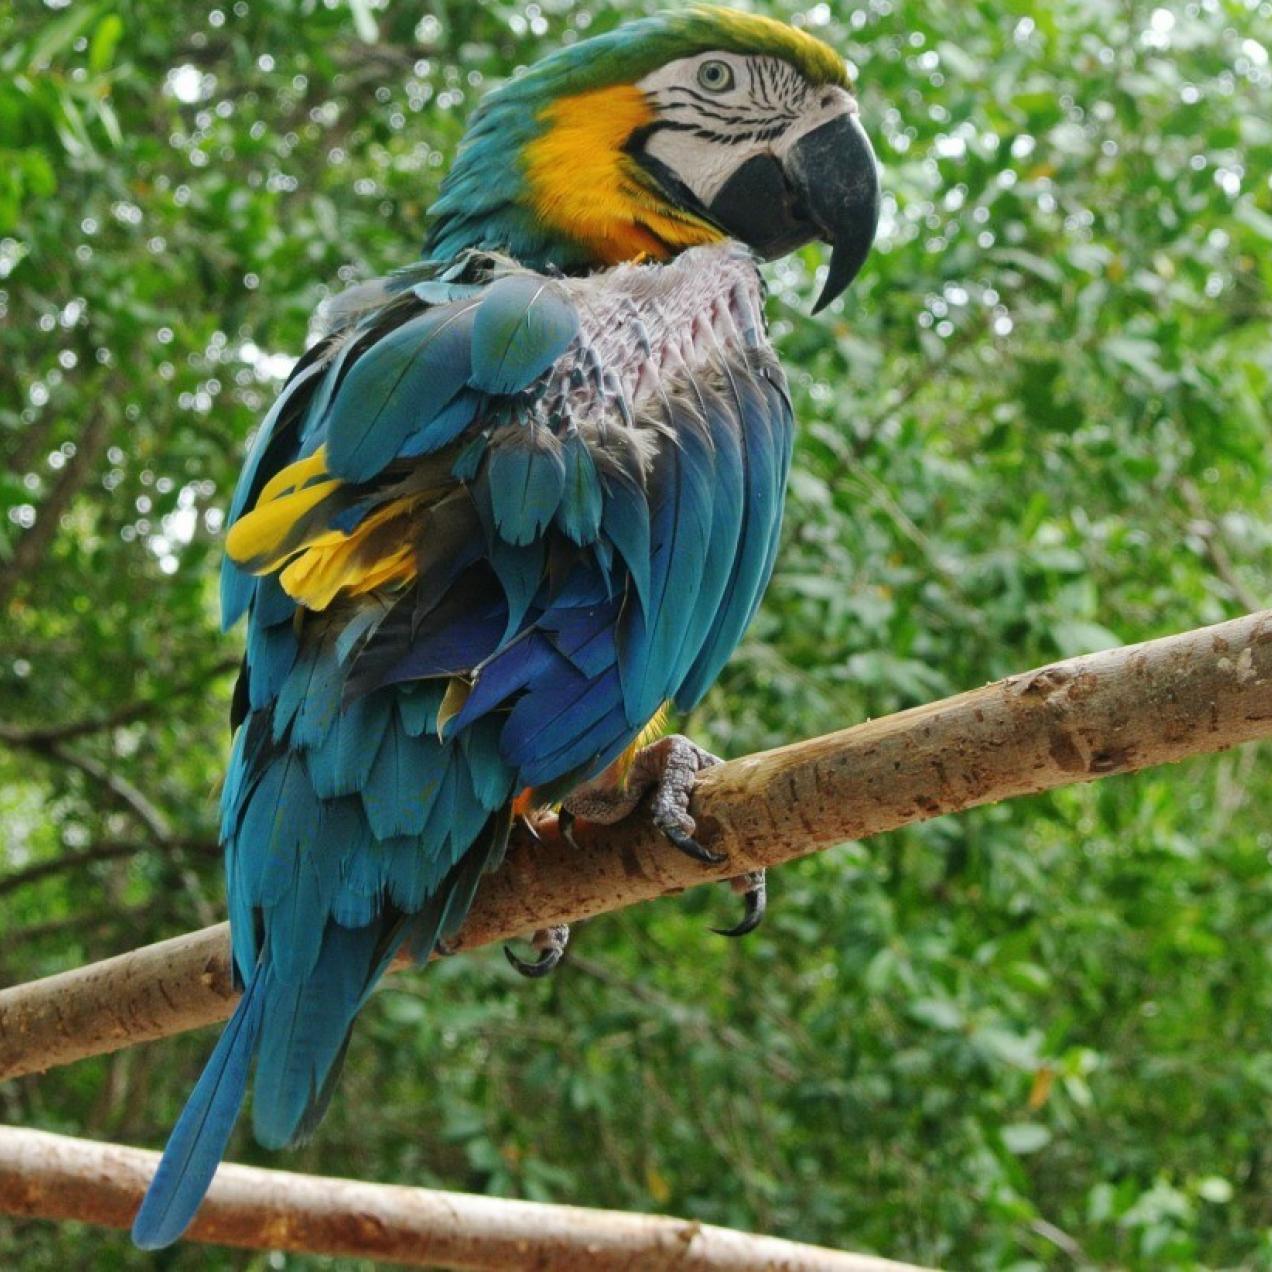 Sandos Stories: Lupita the Macaw